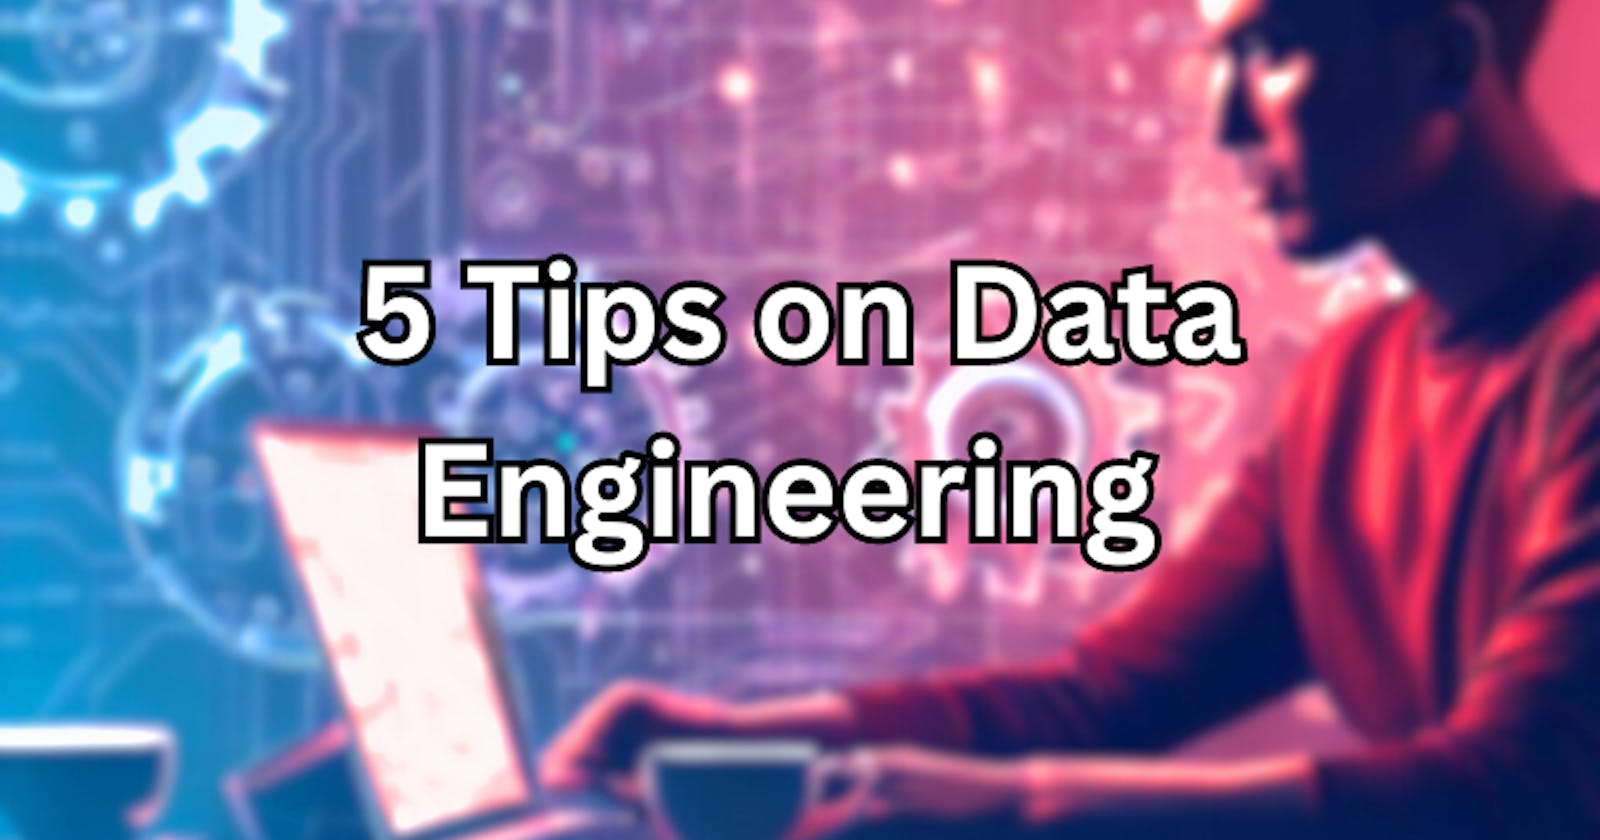 5 Tips on Data Engineering